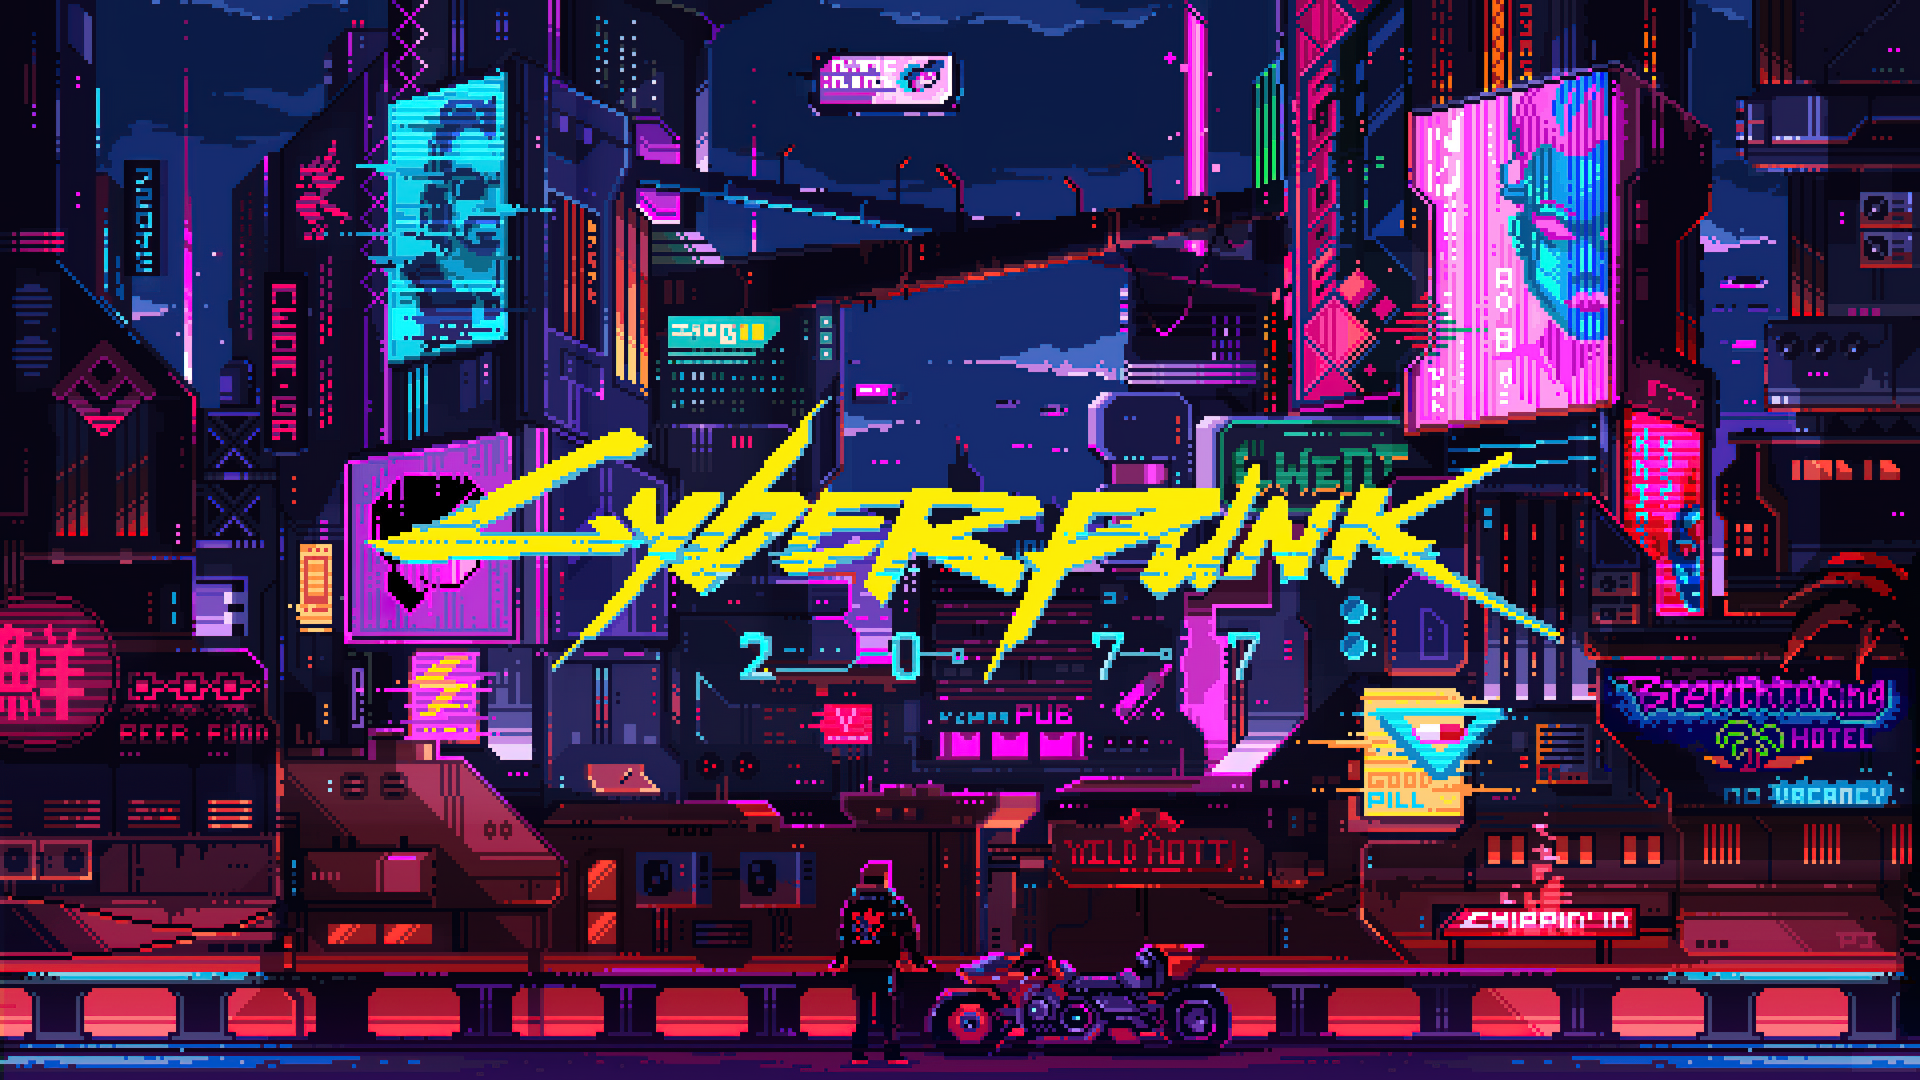 Download wallpaper: Cyberpunk 2077 2 1366x768